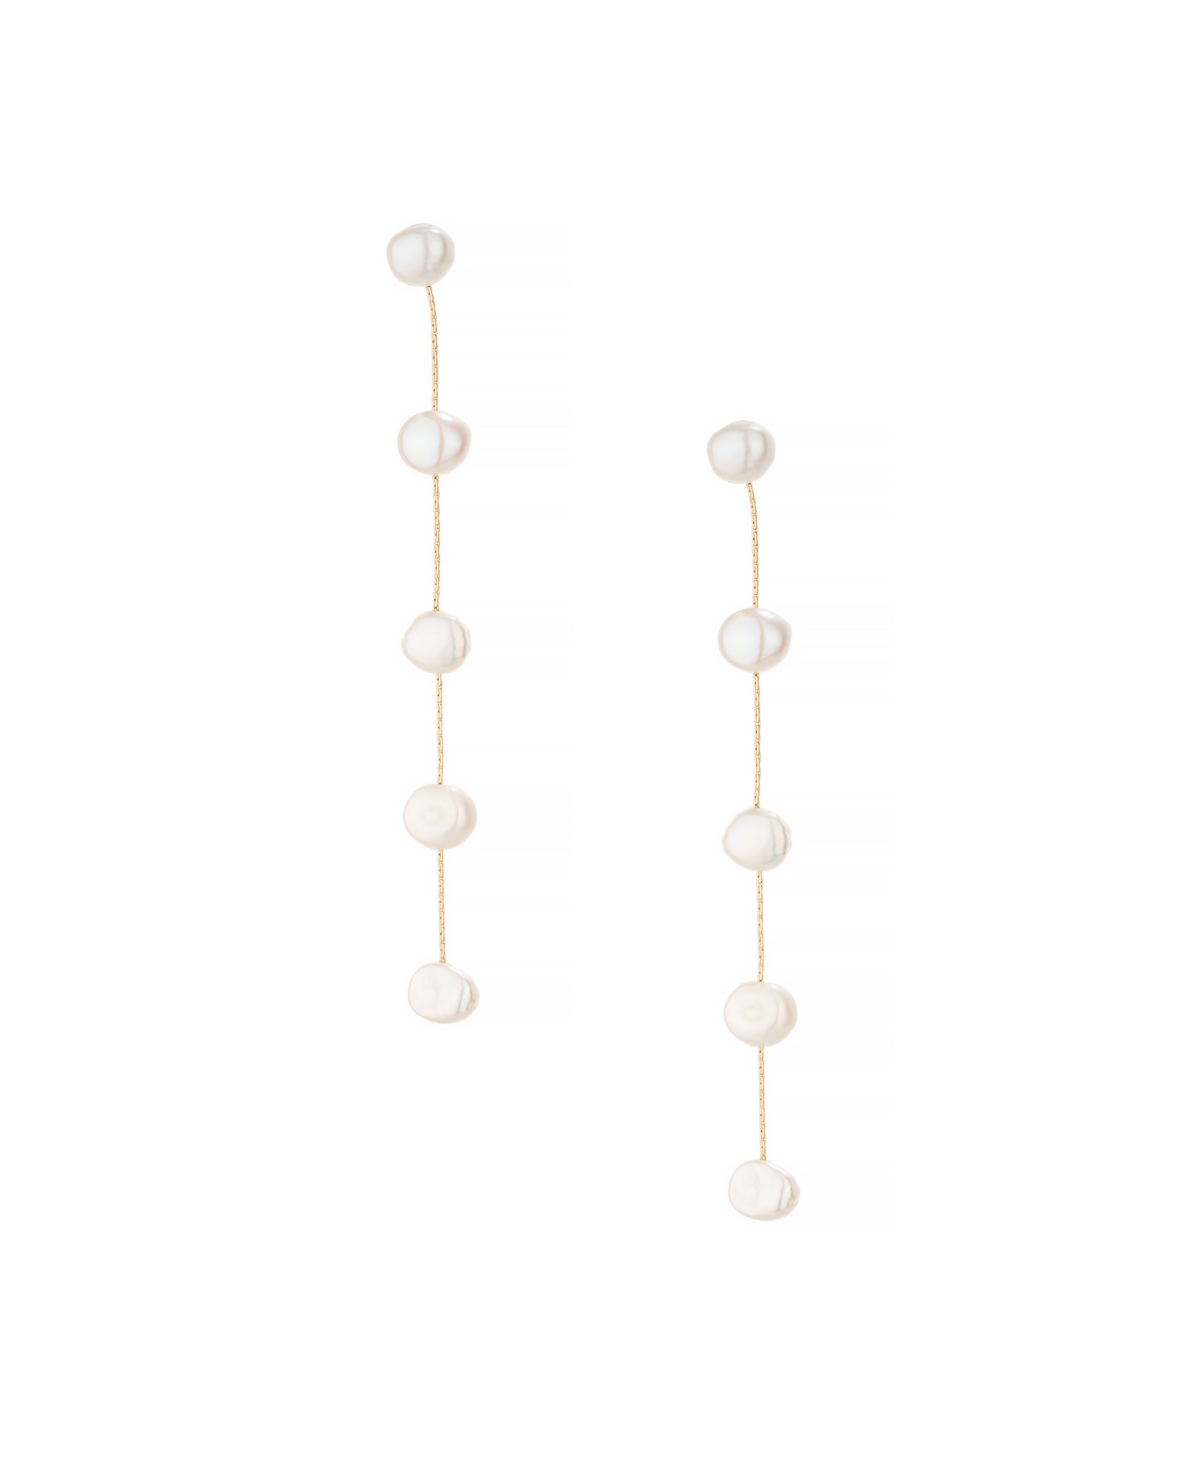 Ettika Imitation Pearls Earrings Dripping In 18k Gold Plating